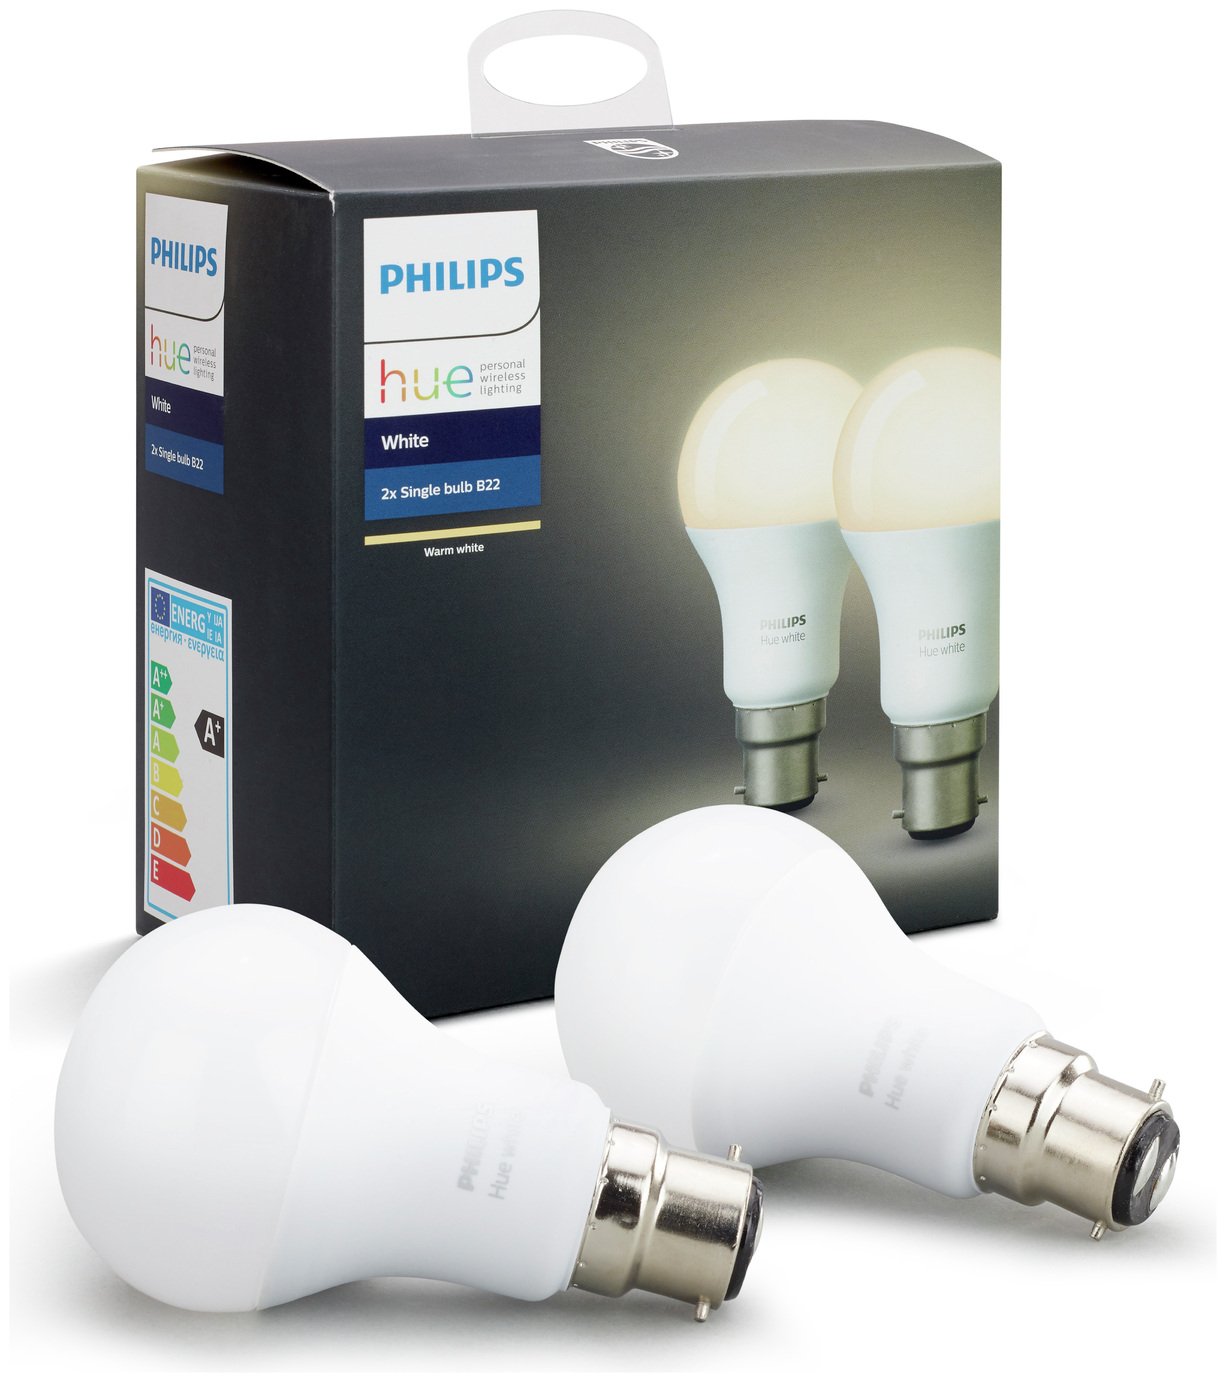 Philips Hue White B22 Bulbs review